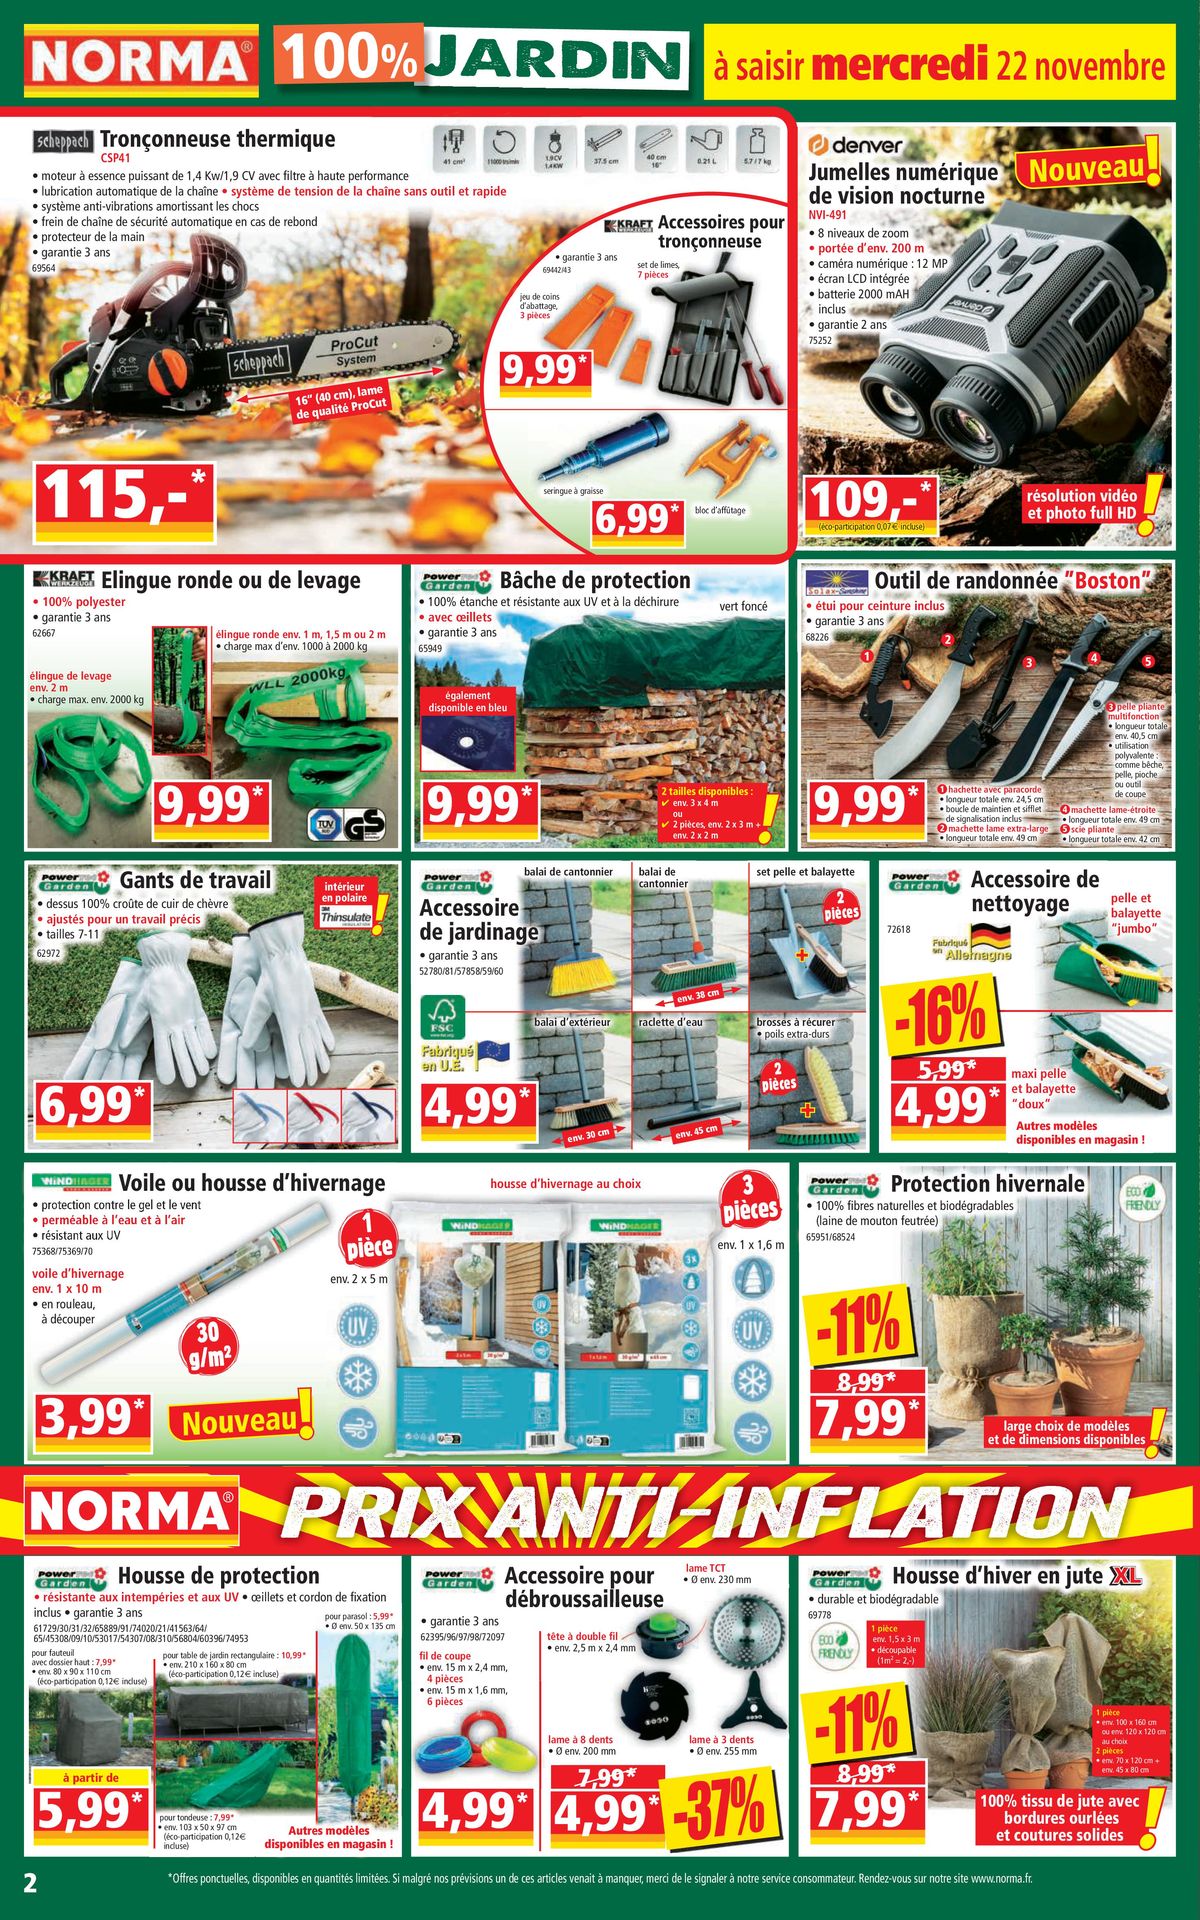 Catalogue Prix anti-inflation, page 00002